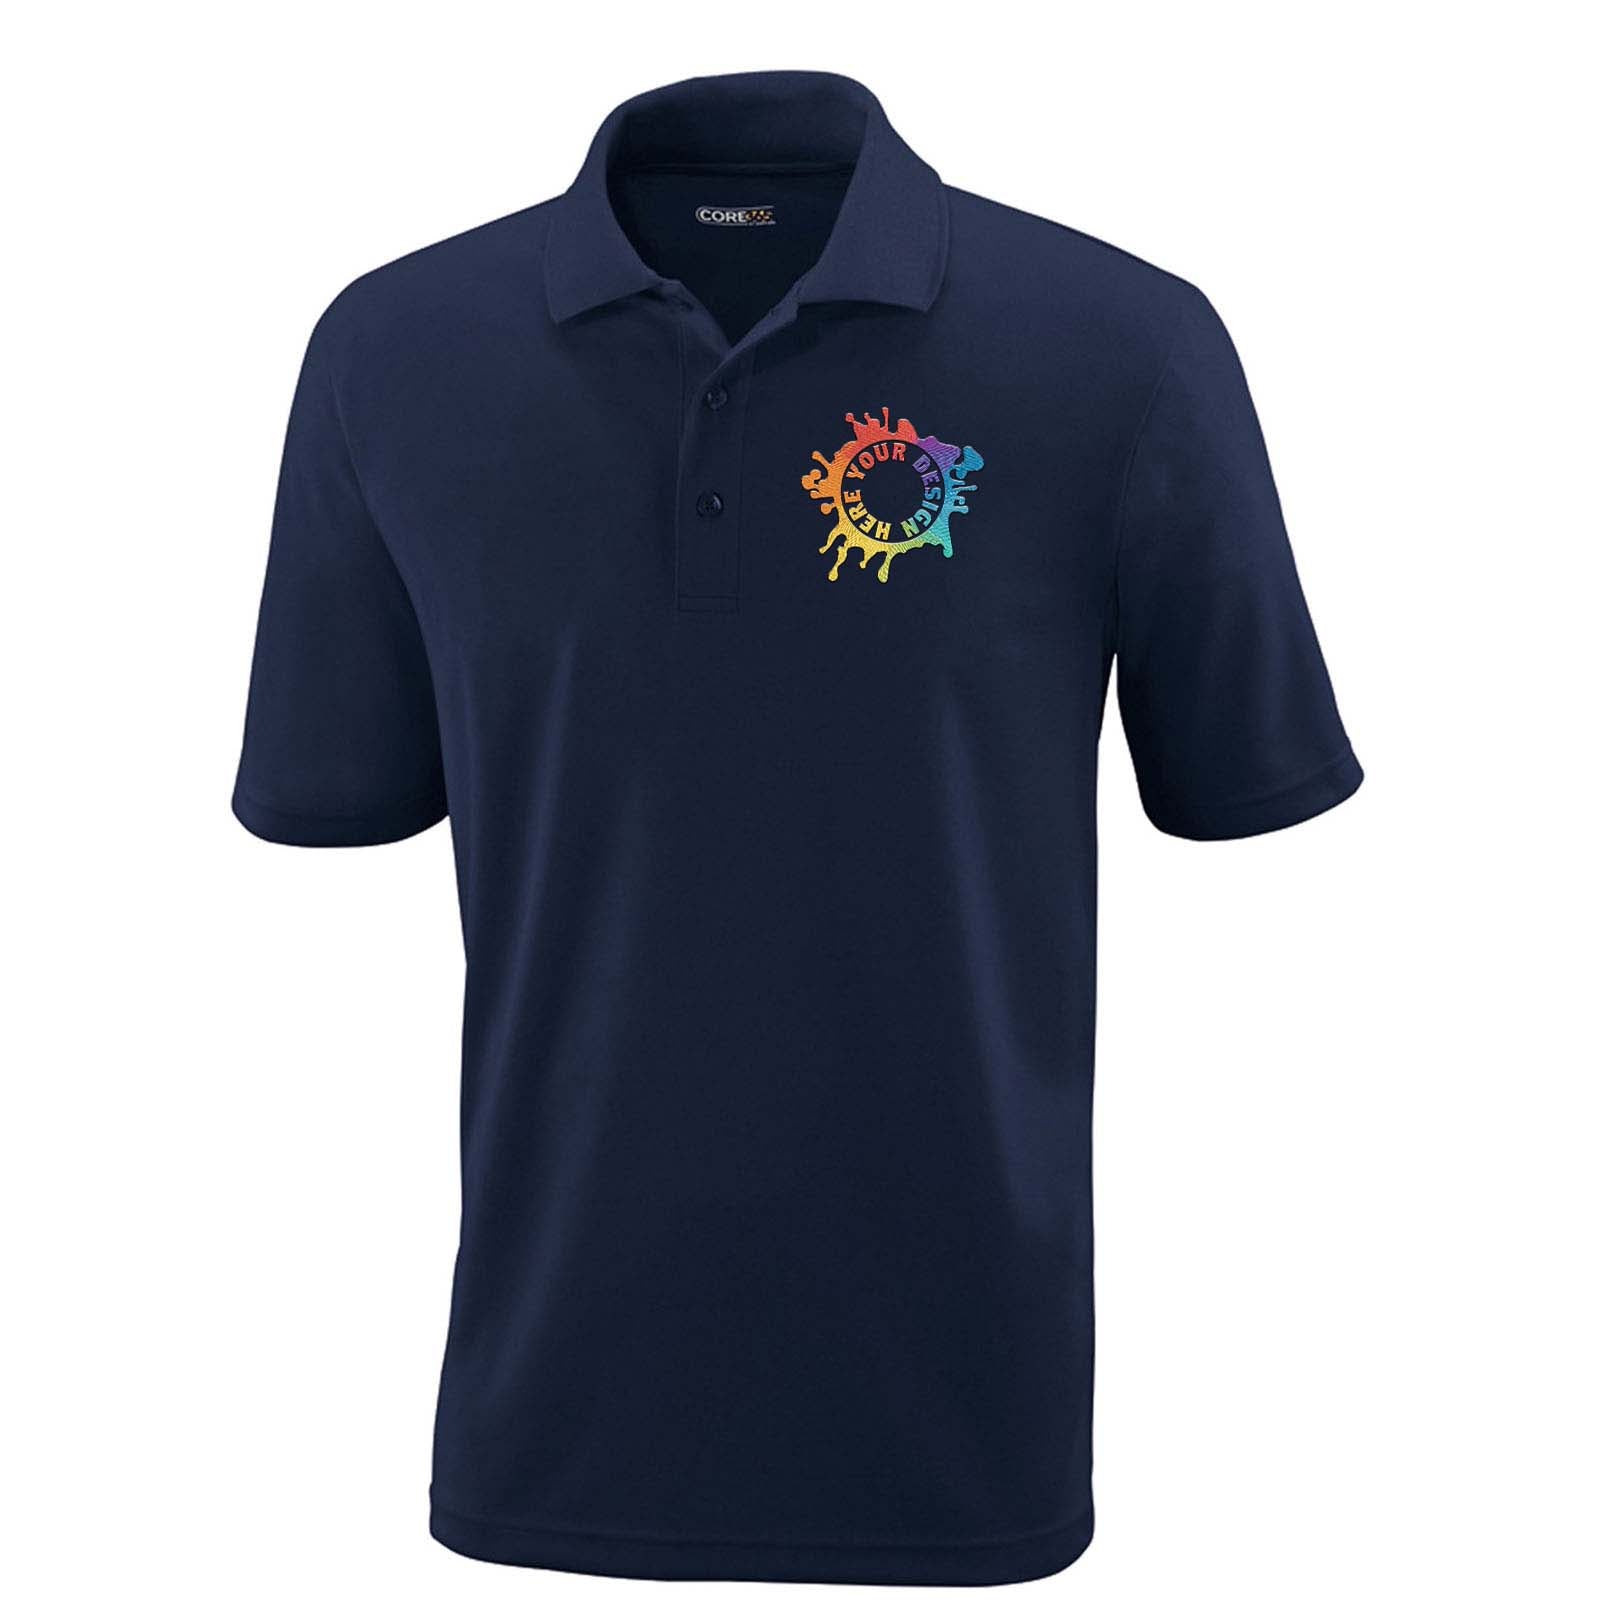 Core365 Men's Origin Performance 100% Polyester Piqué Polo T-Shirt Embroidery - Mato & Hash